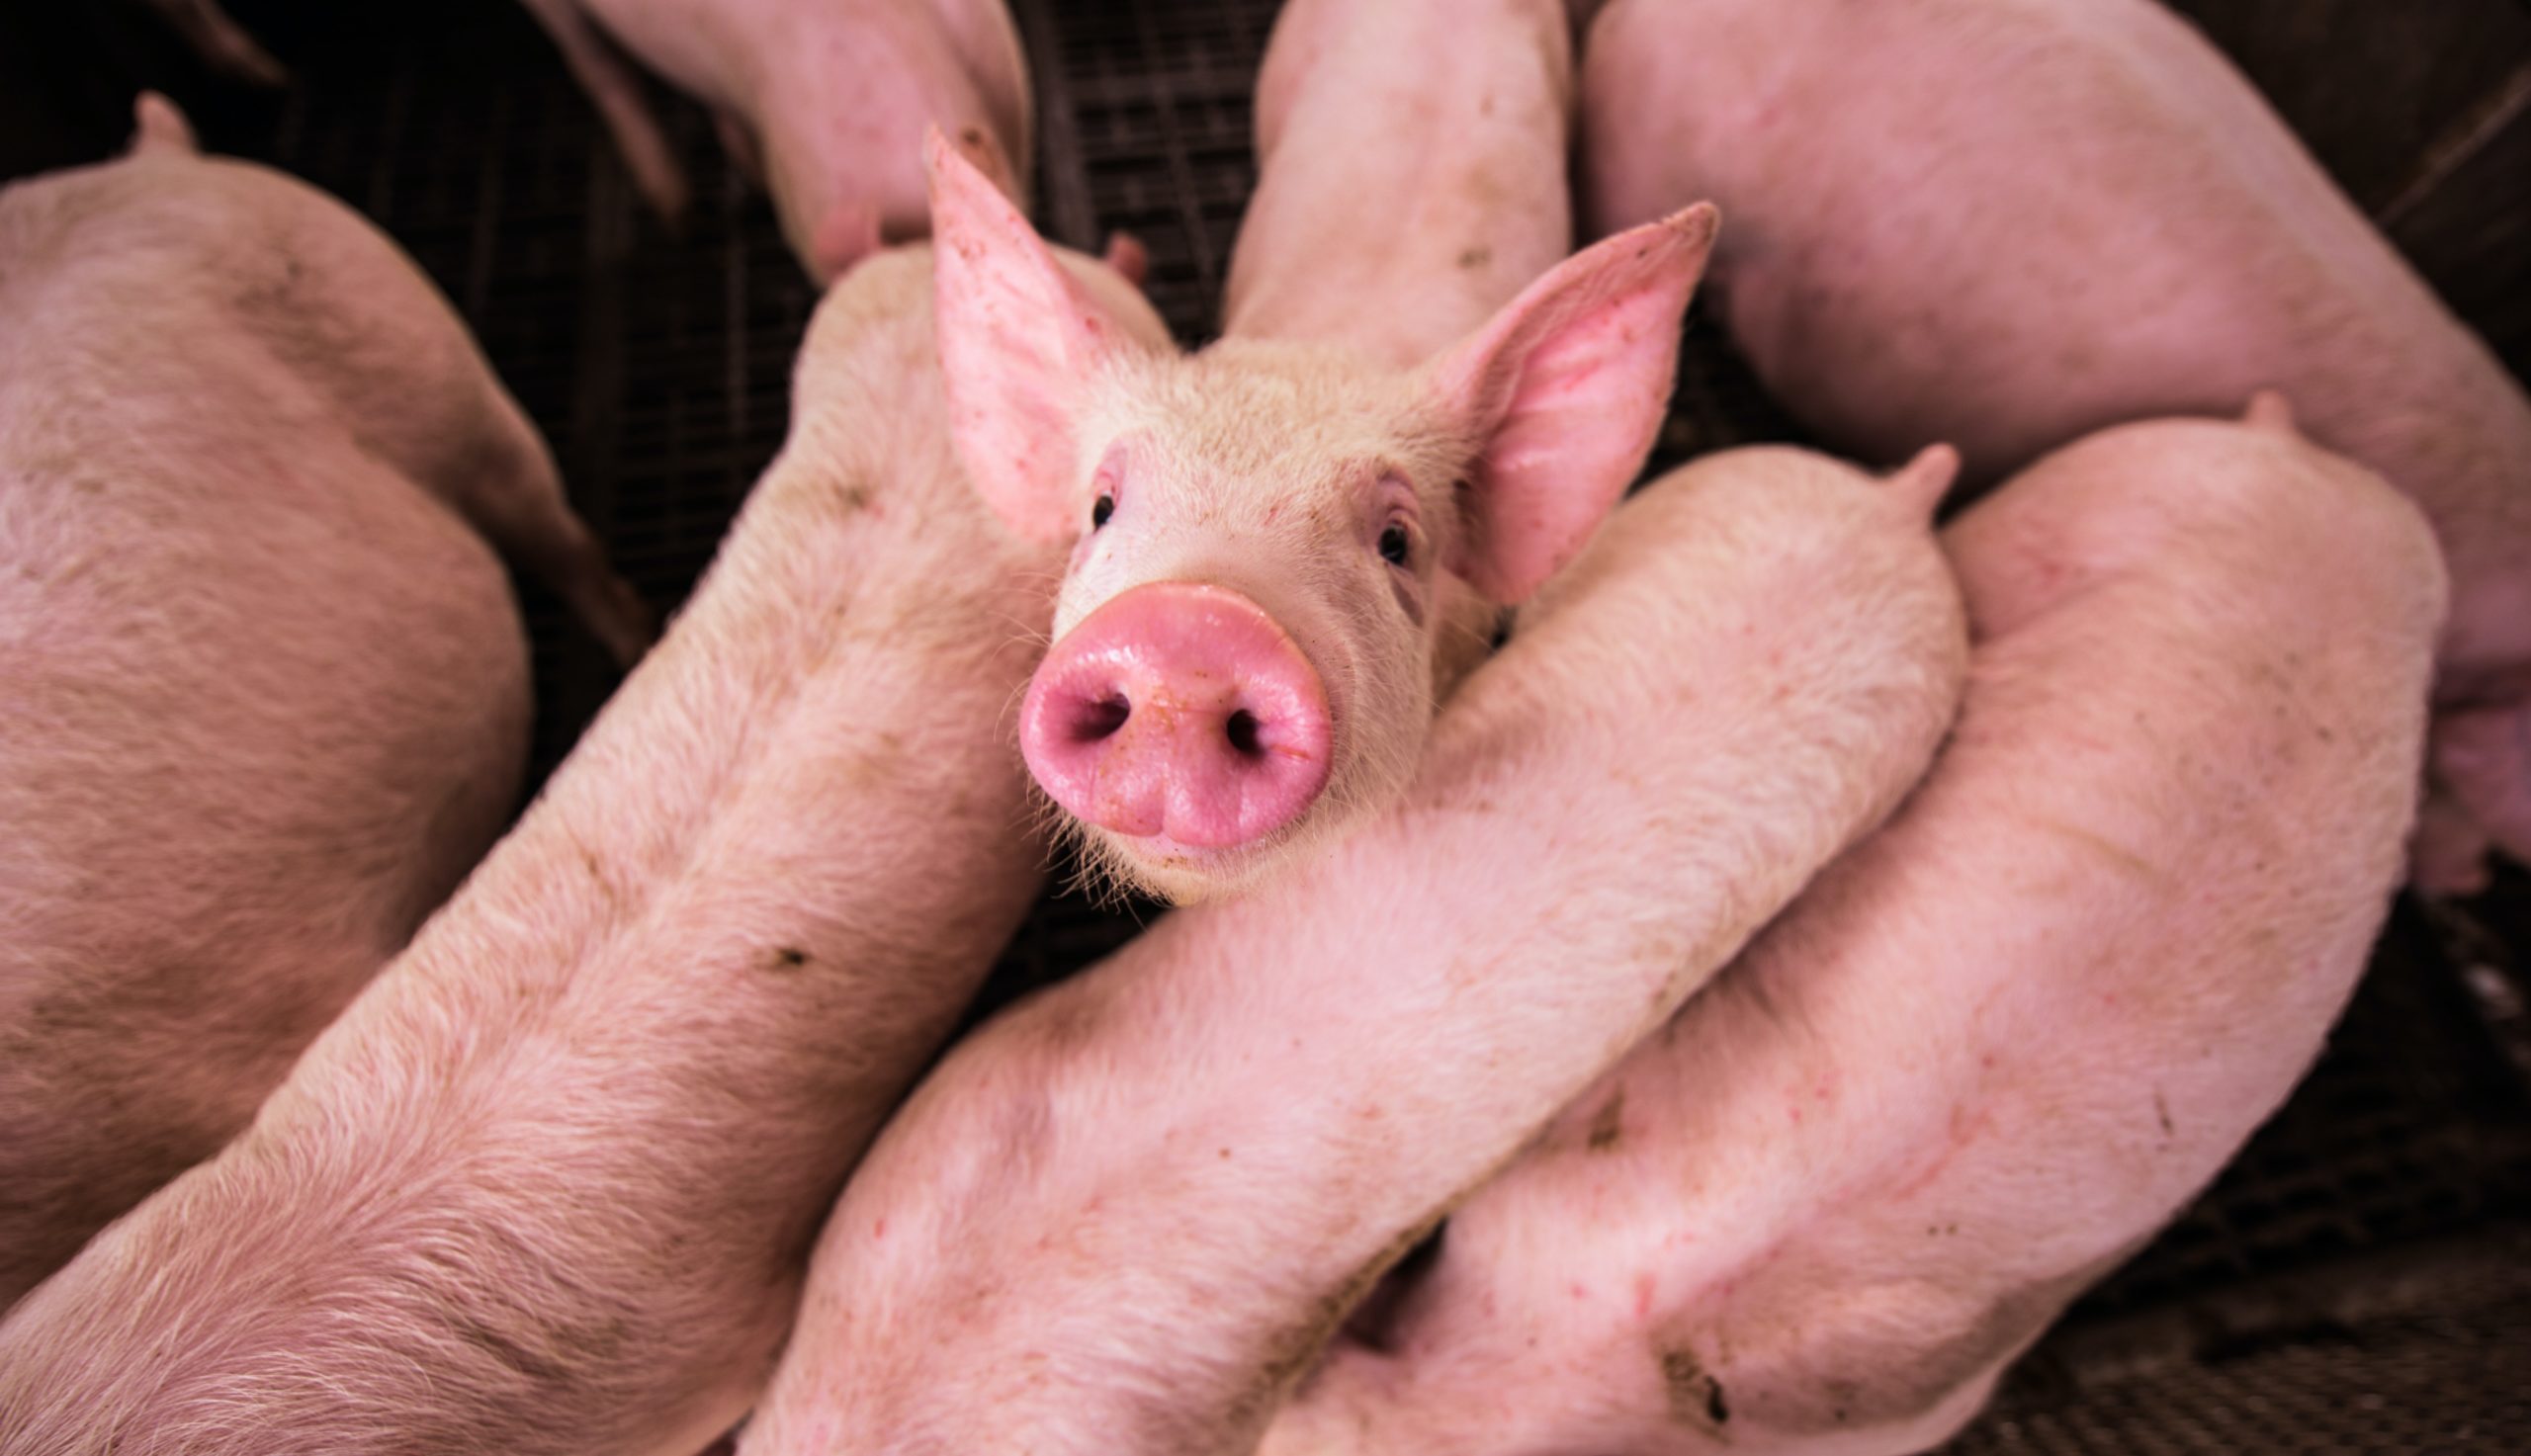 Lower resistance against antibiotics amongst farm animals